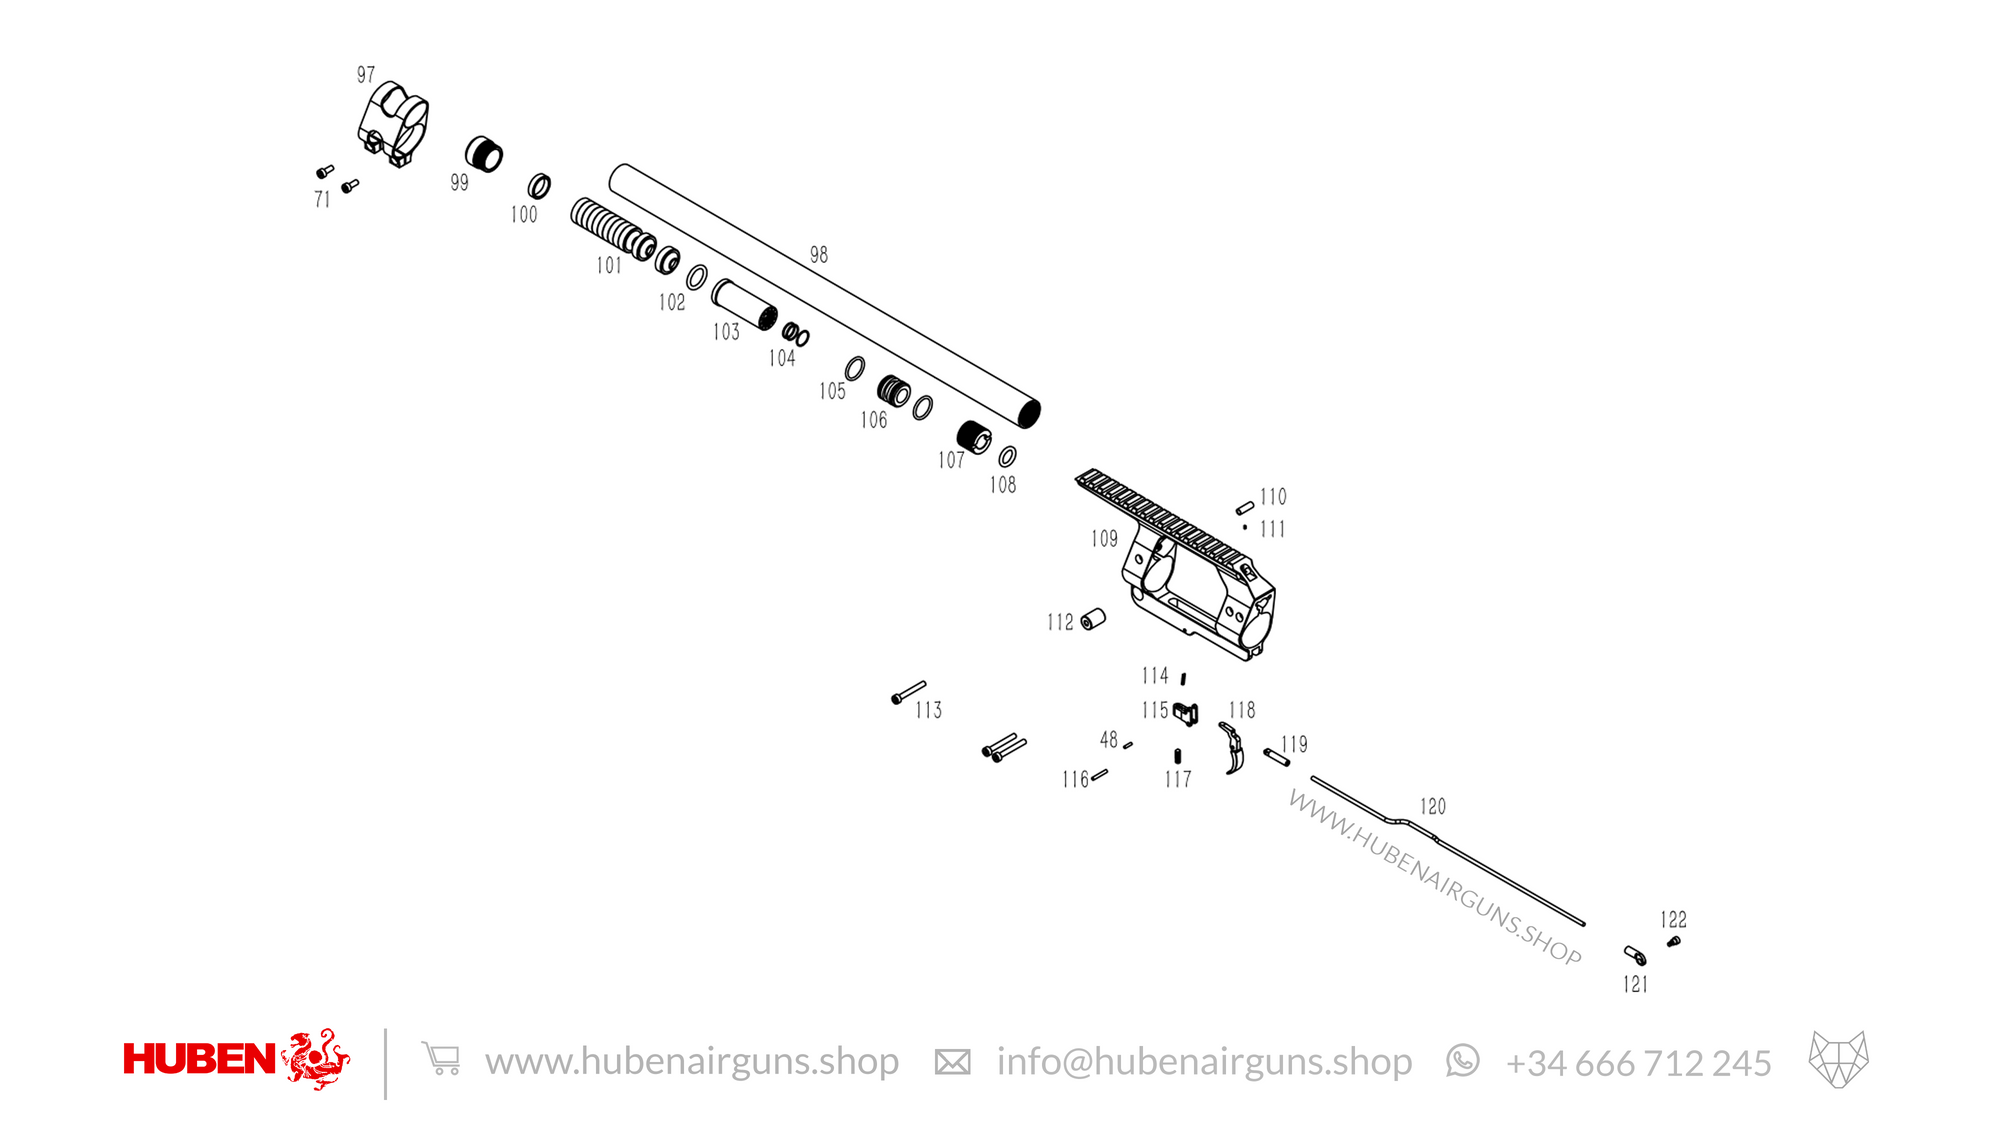 Spare parts Huben K1 Diagram 4 Shroud plus Trigger and Rail